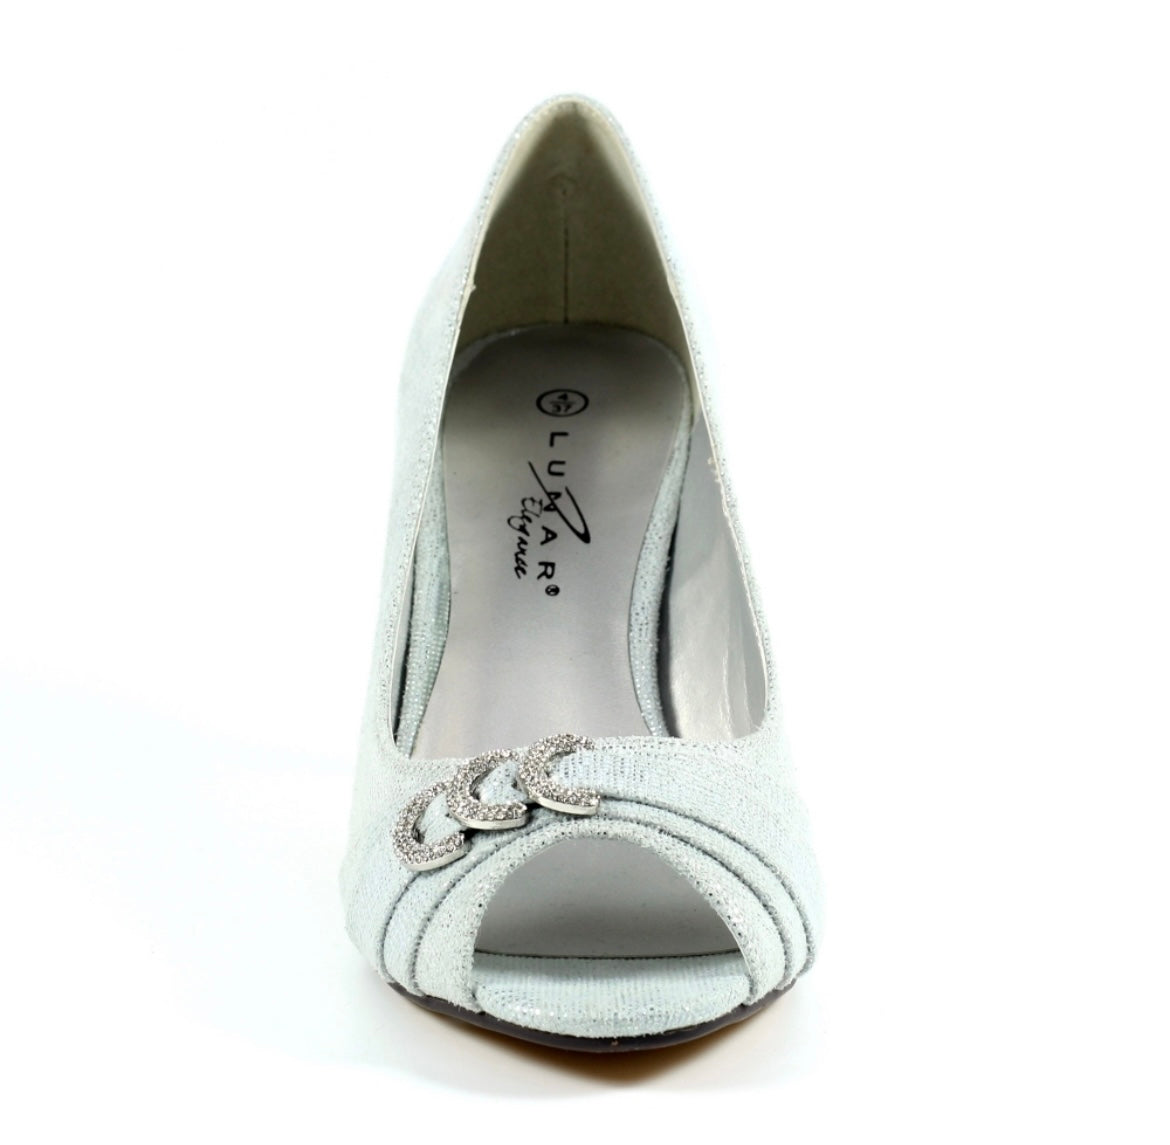 Lunar Lyla Flr047 Silver Dress Shoes